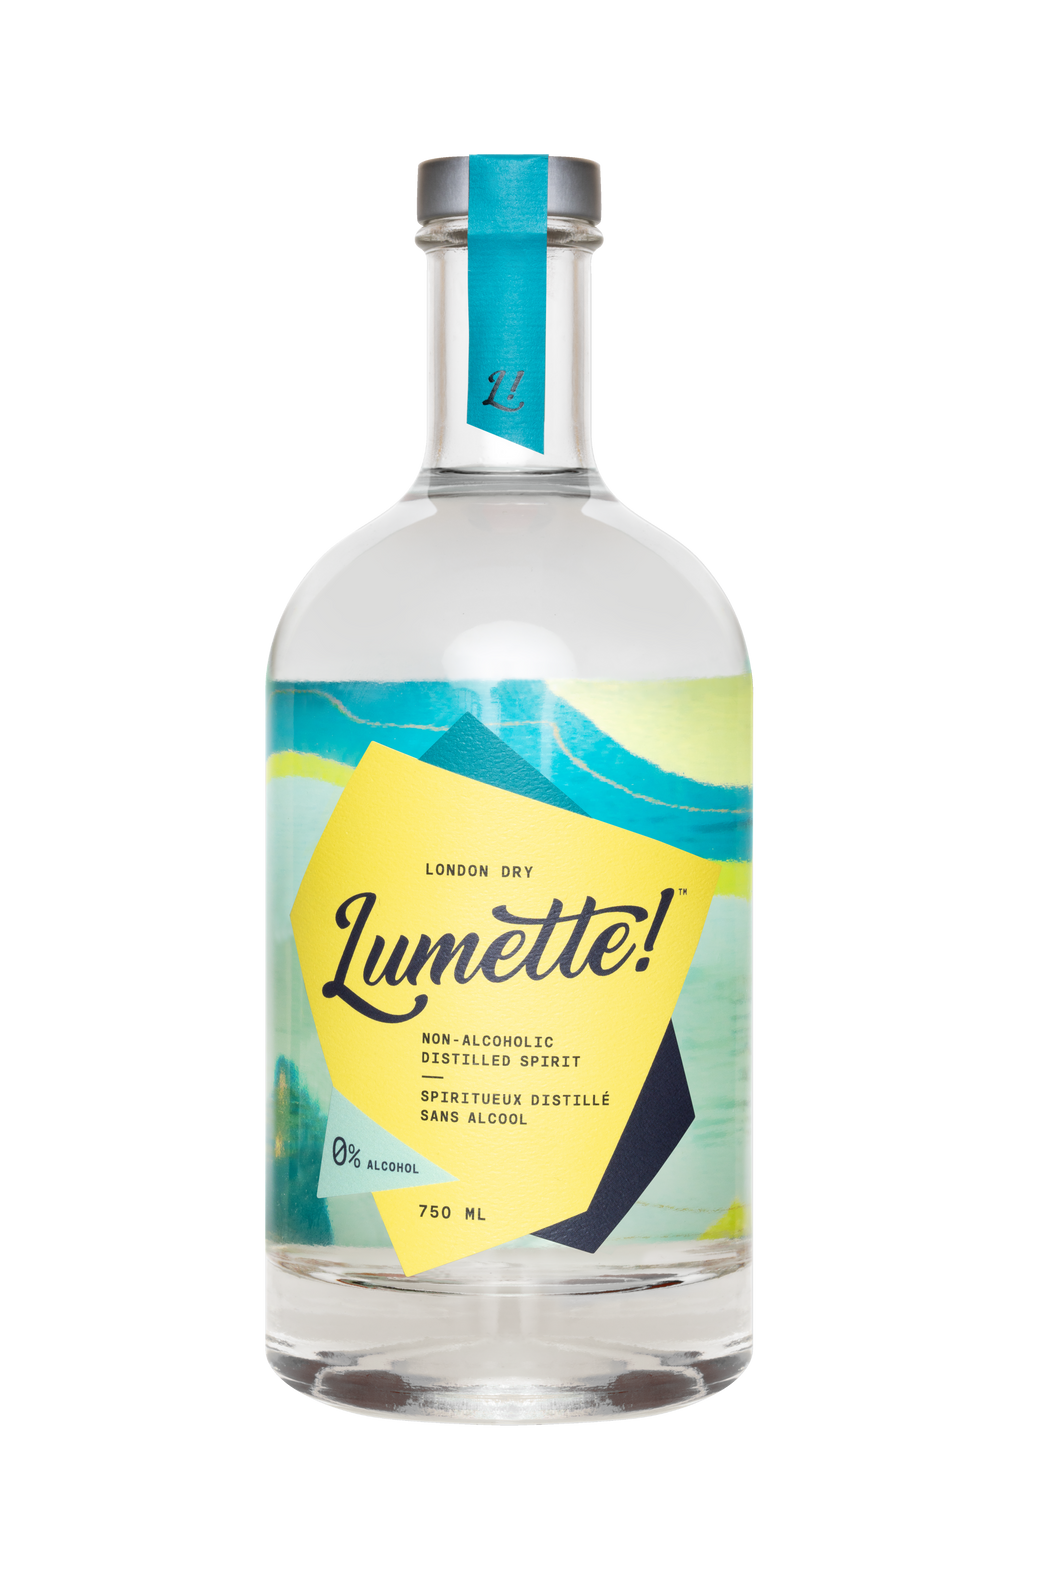 Lumette! London Dry in Halifax Nova Scotia